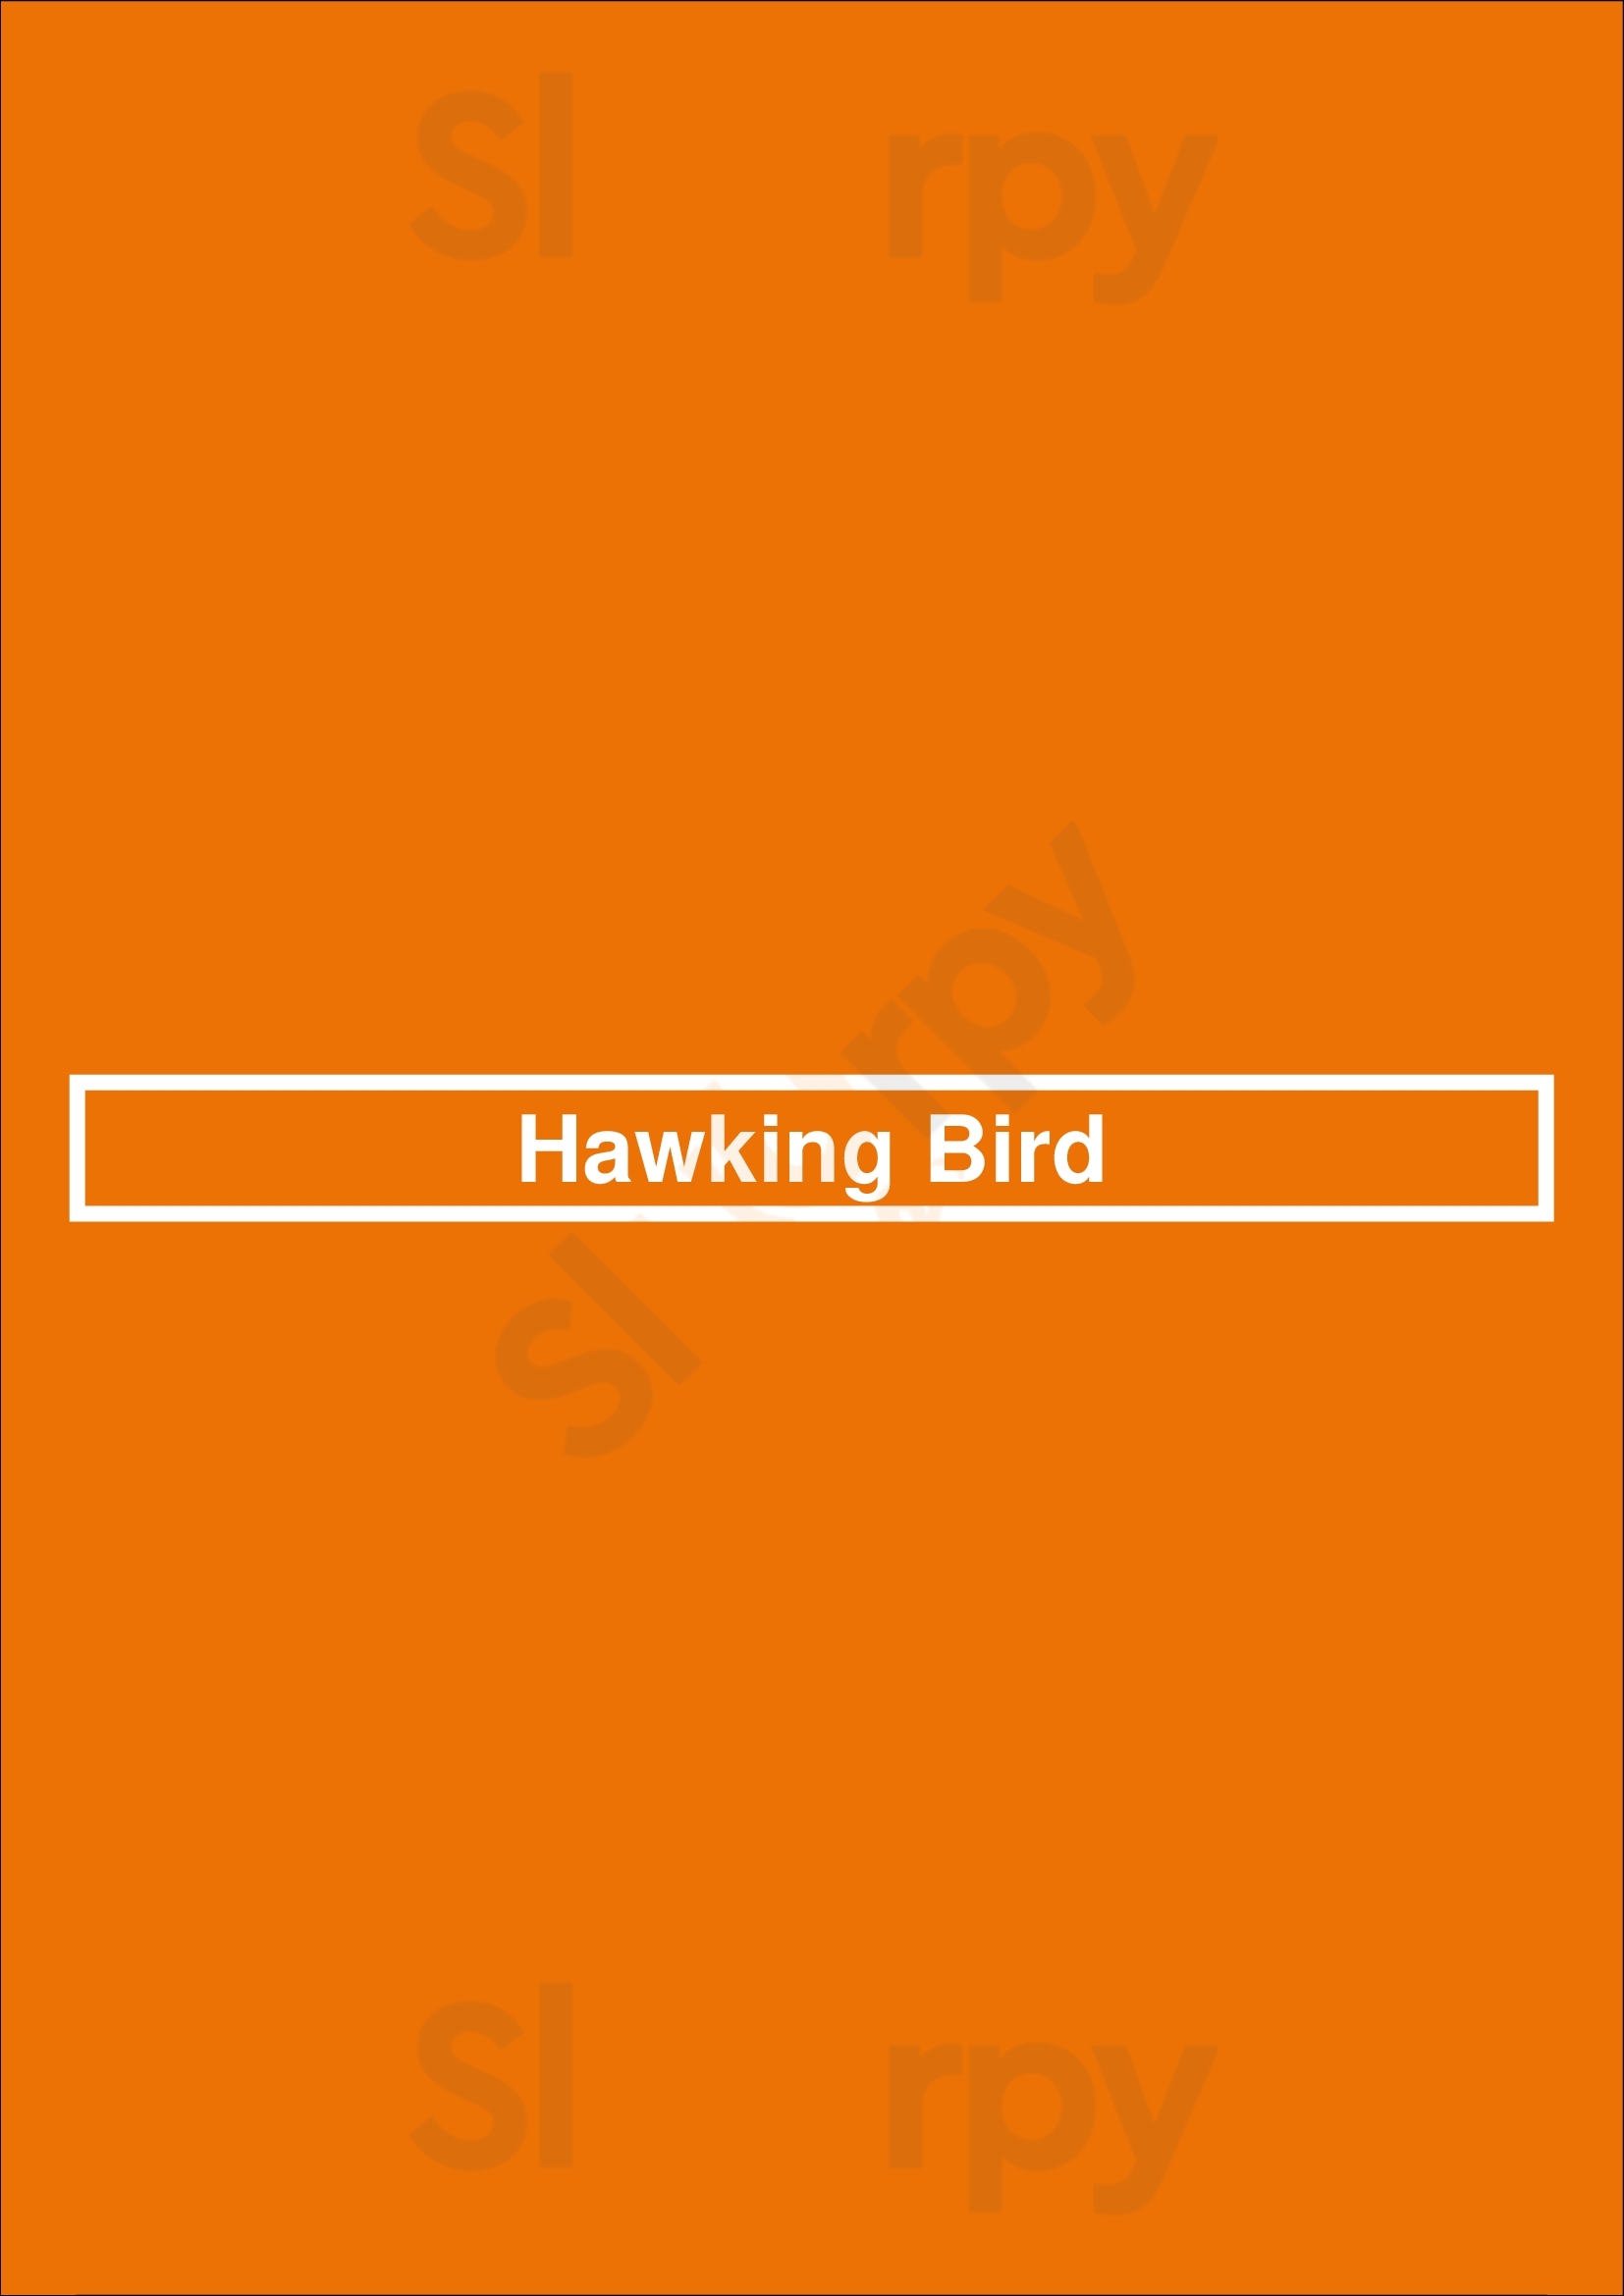 Hawking Bird Oakland Menu - 1